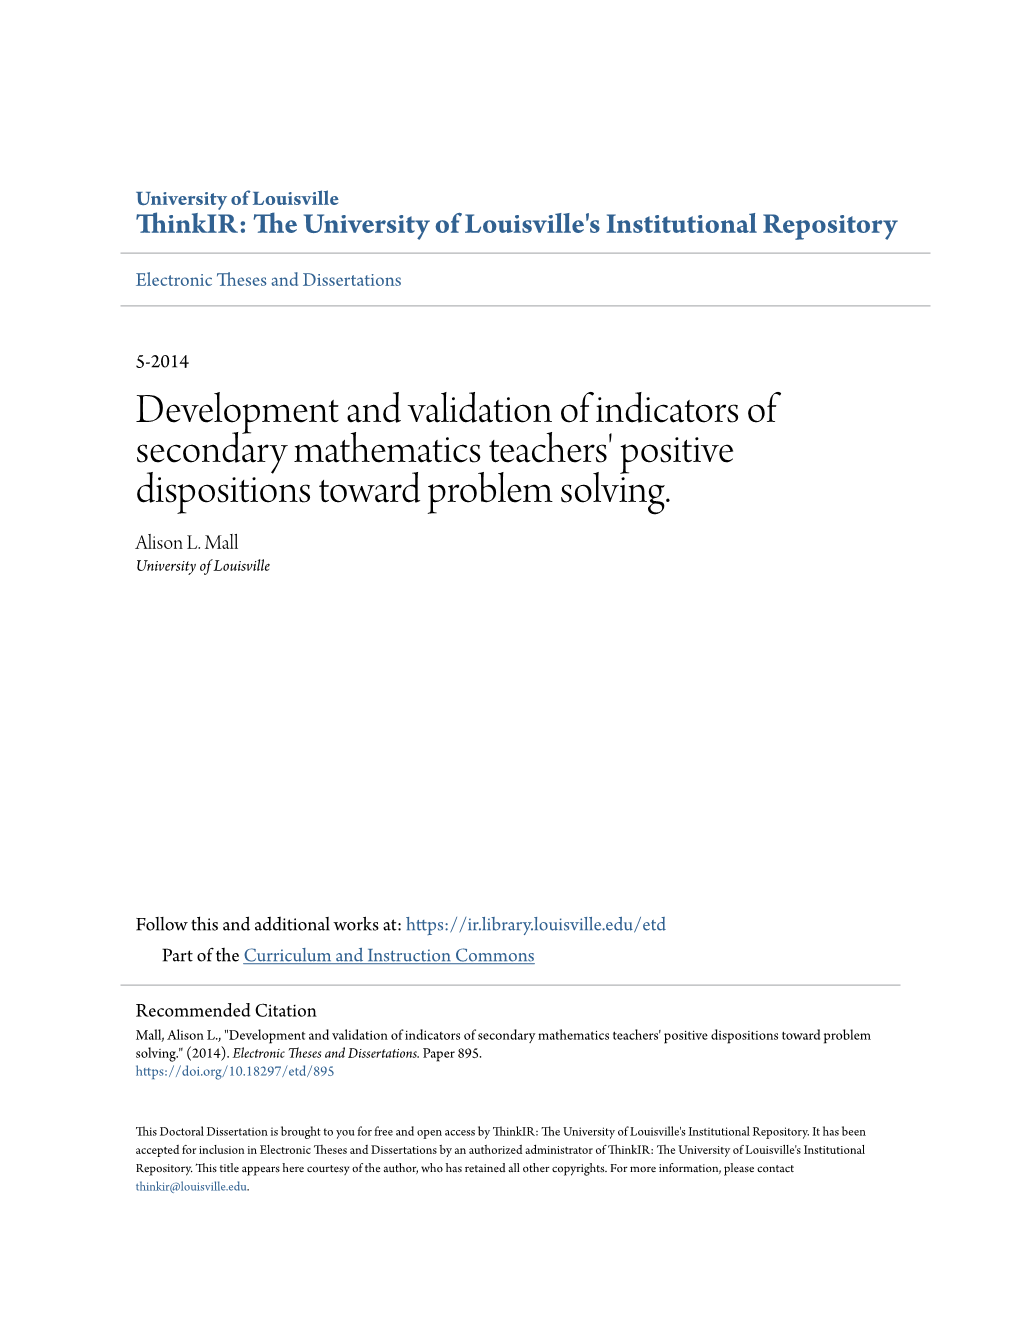 Development and Validation of Indicators of Secondary Mathematics Teachers' Positive Dispositions Toward Problem Solving. Alison L